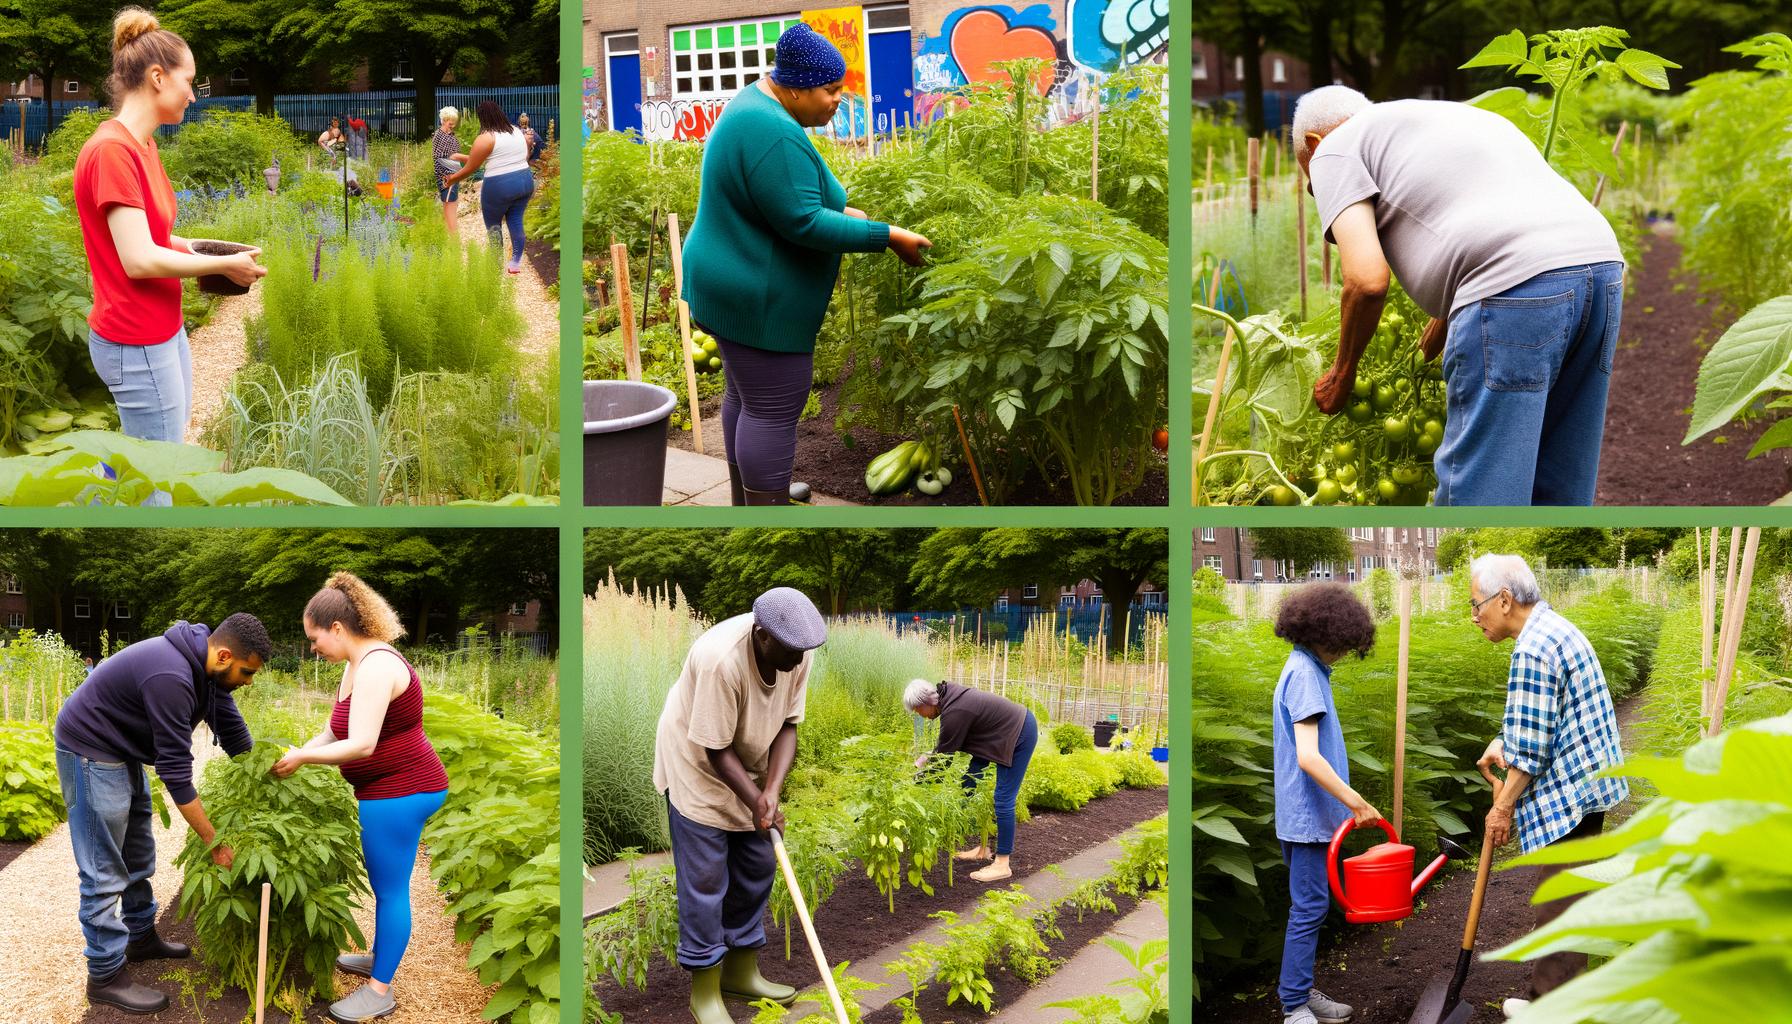 Community gardens linked to crime reduction Balanced News